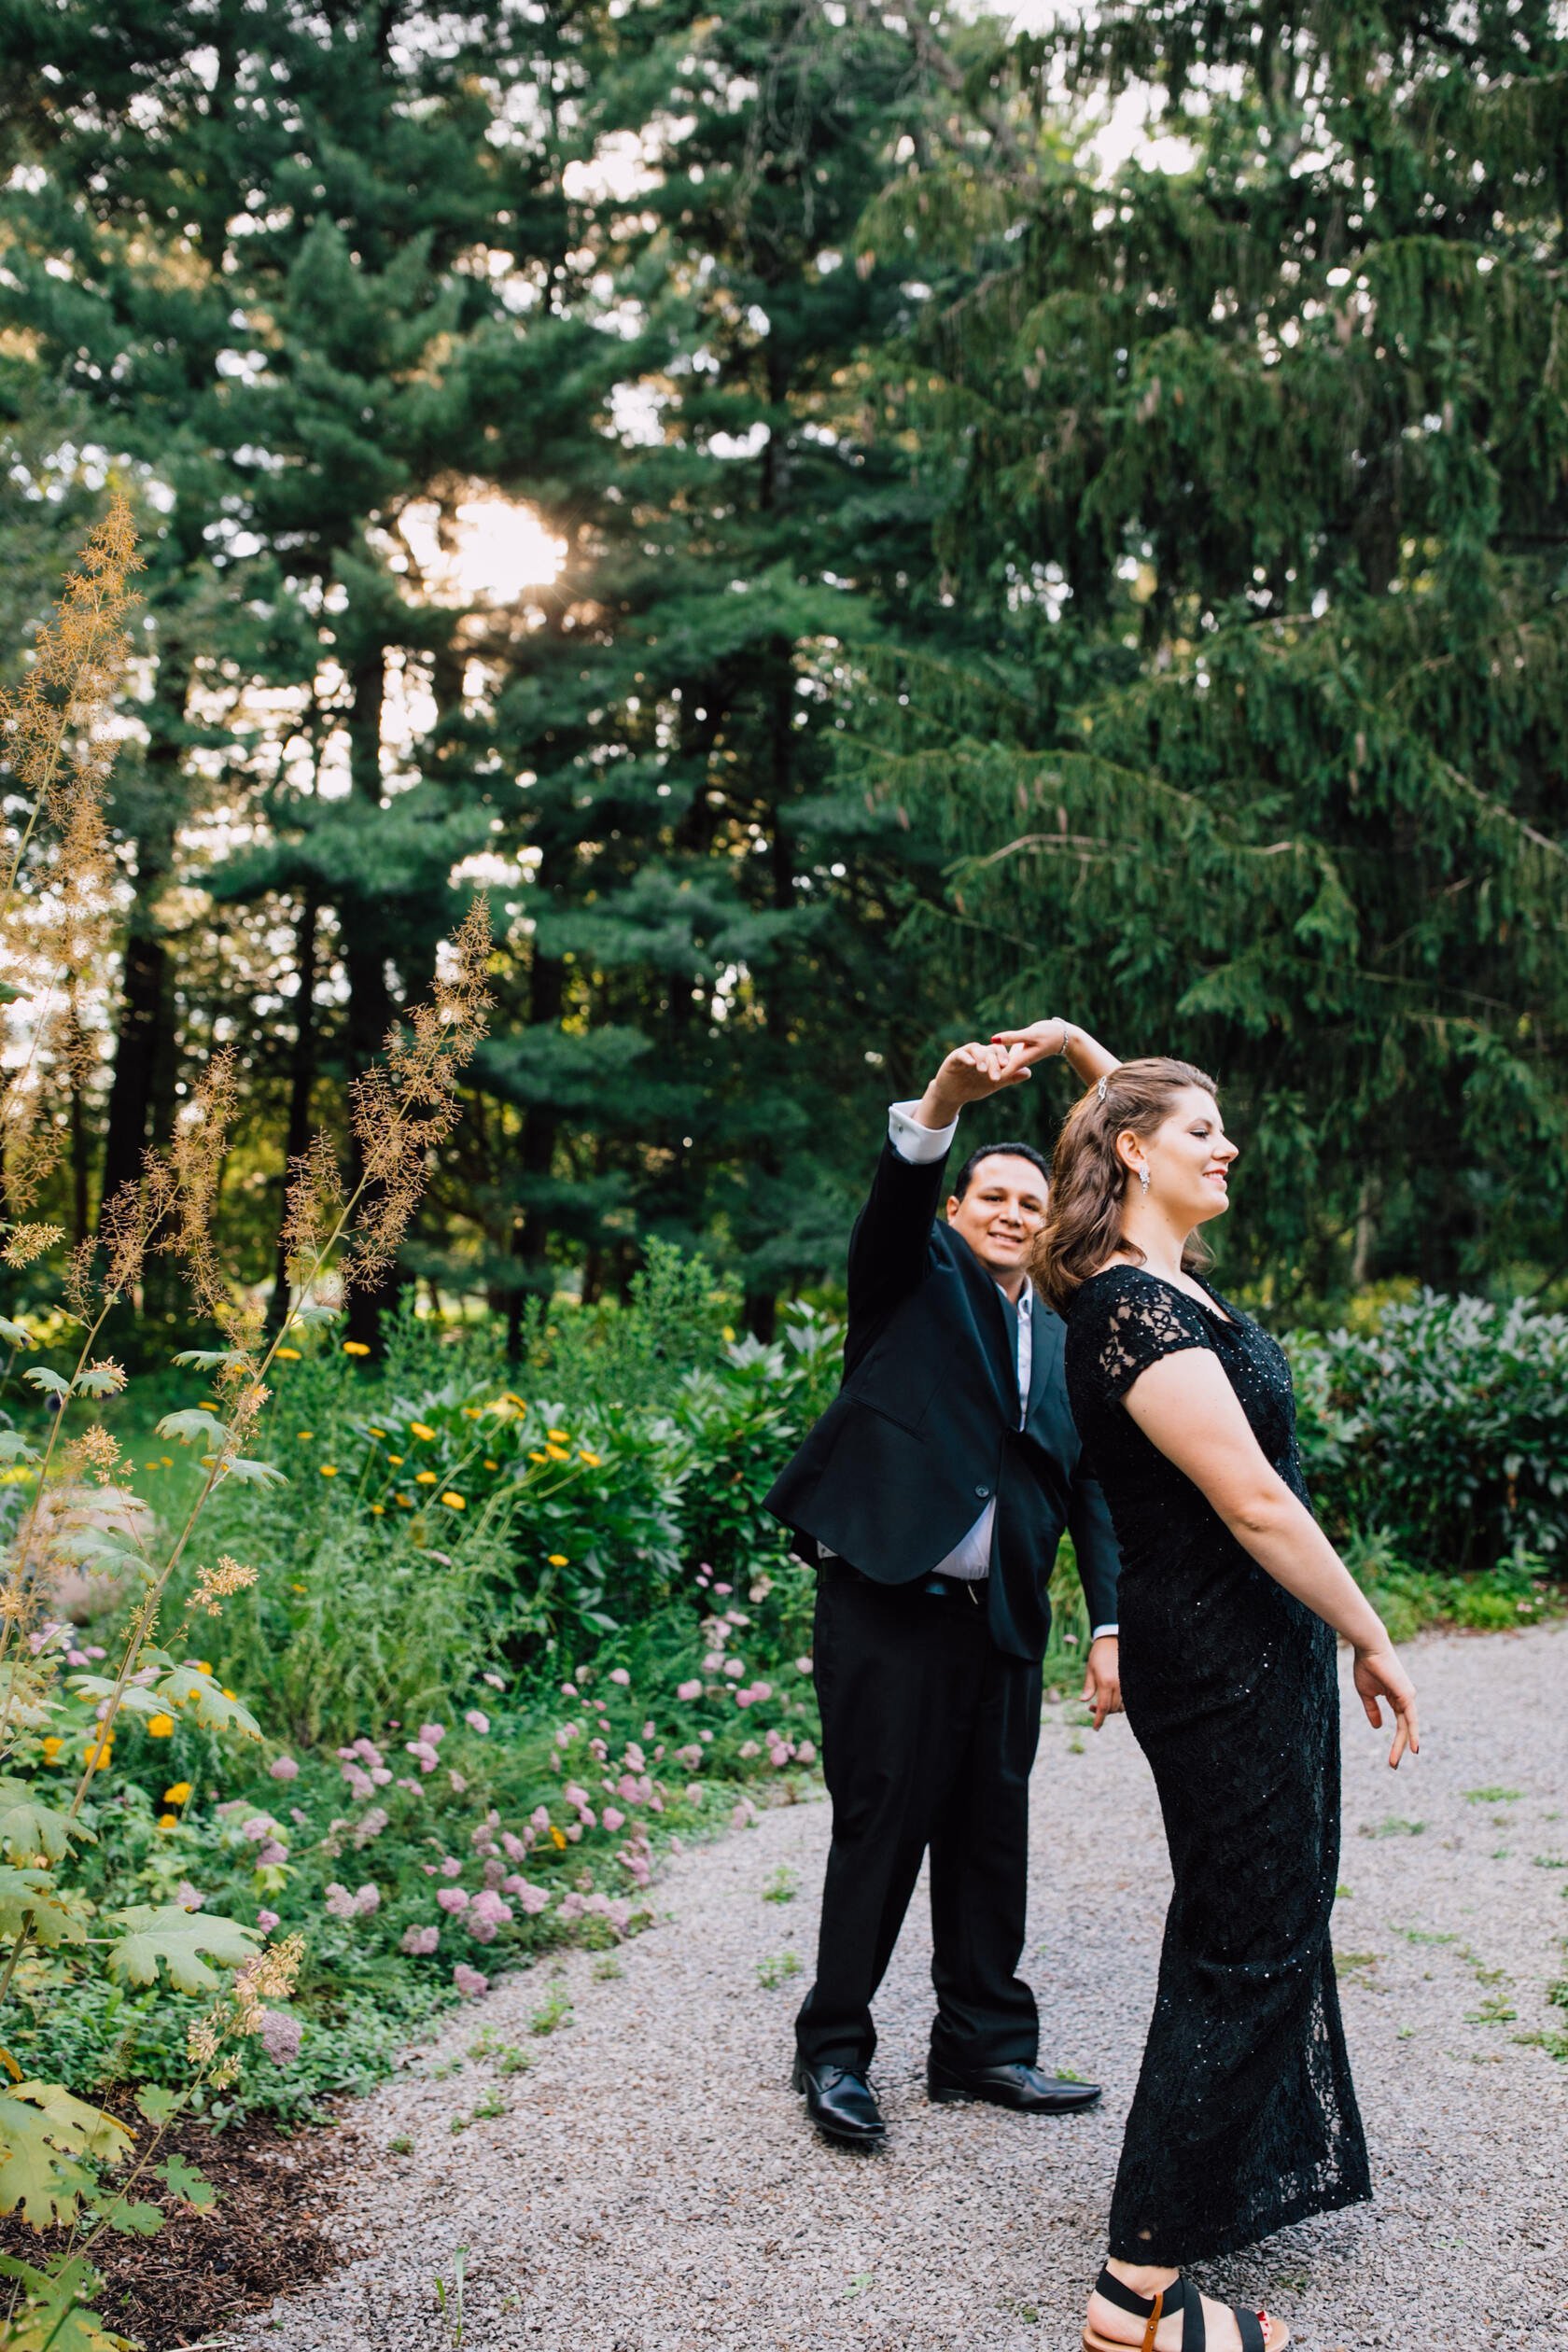  kevin twirls elizabeth during a photoshoot to celebrate their anniversary in Cazenovia, NY 